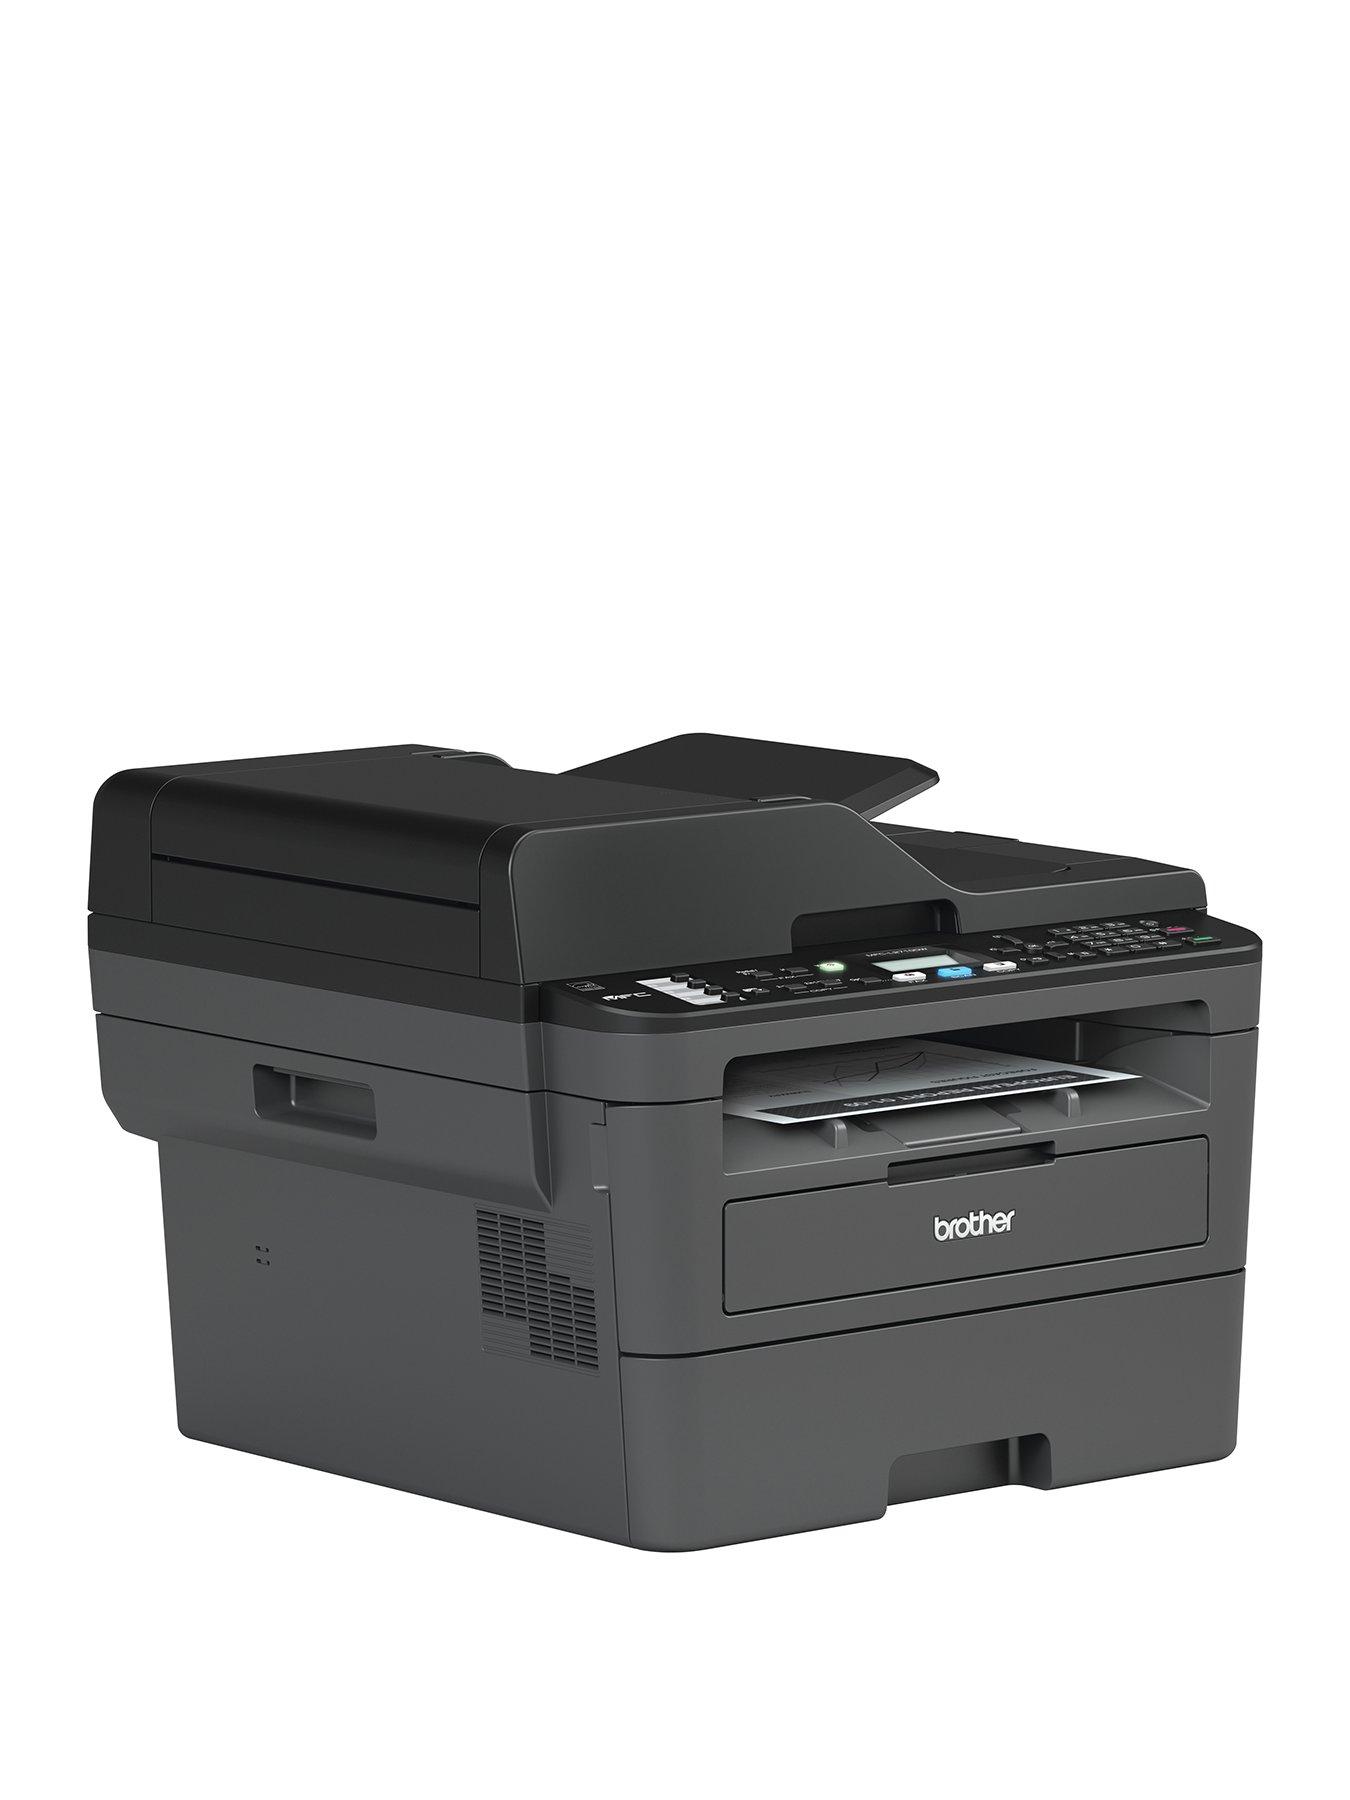  Brother Monochrome Laser Printer, MFCL2710DW, Wireless